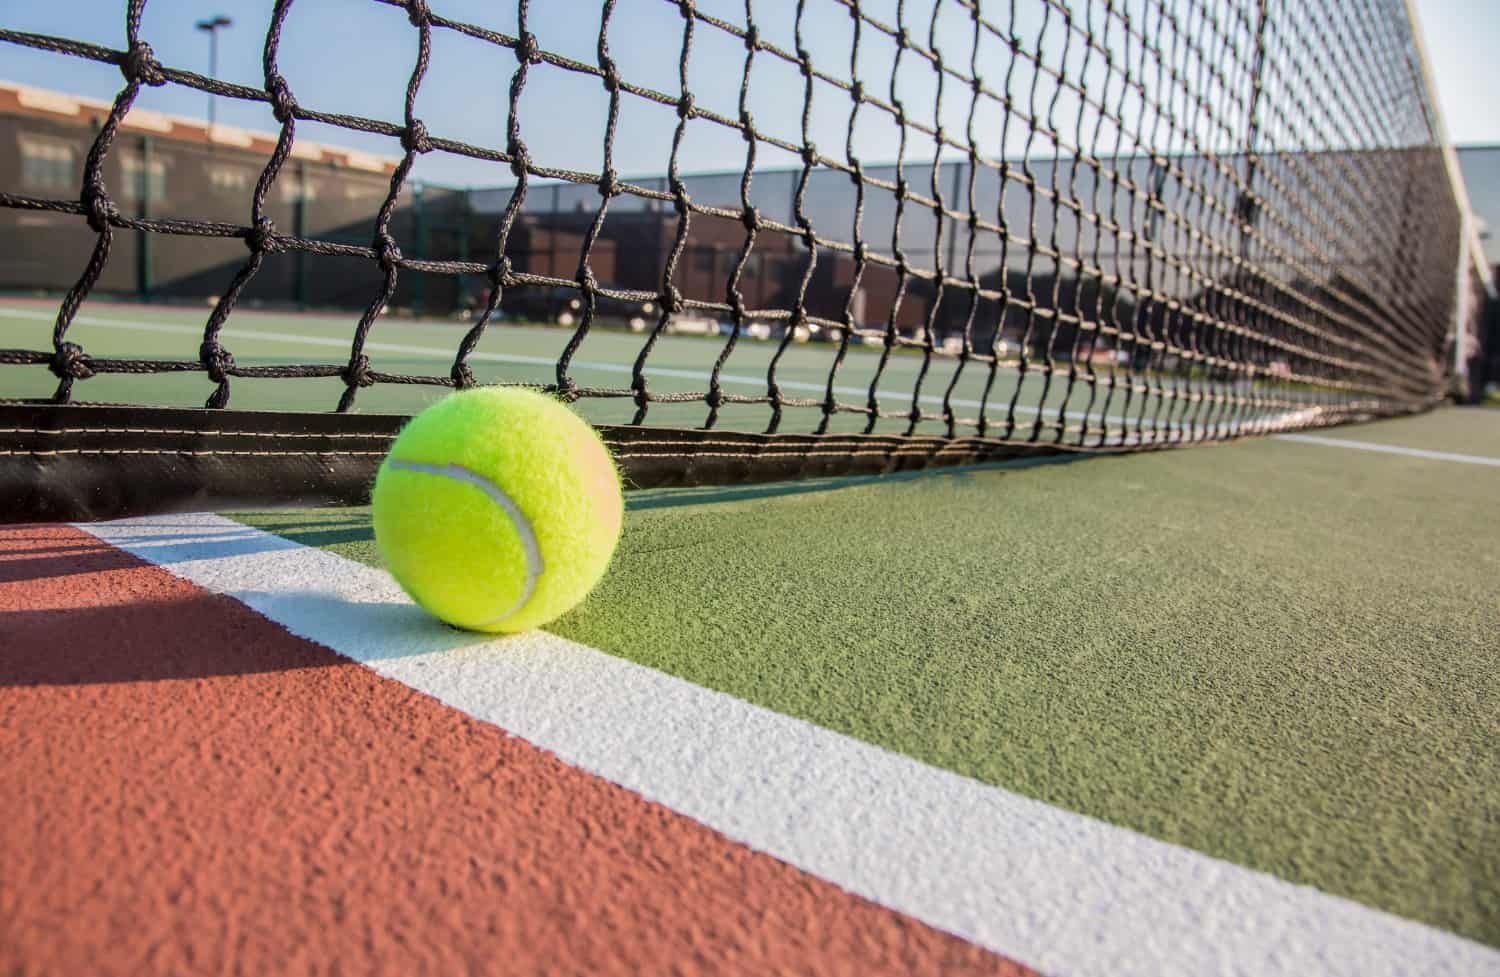 tennis ball next to black net on court